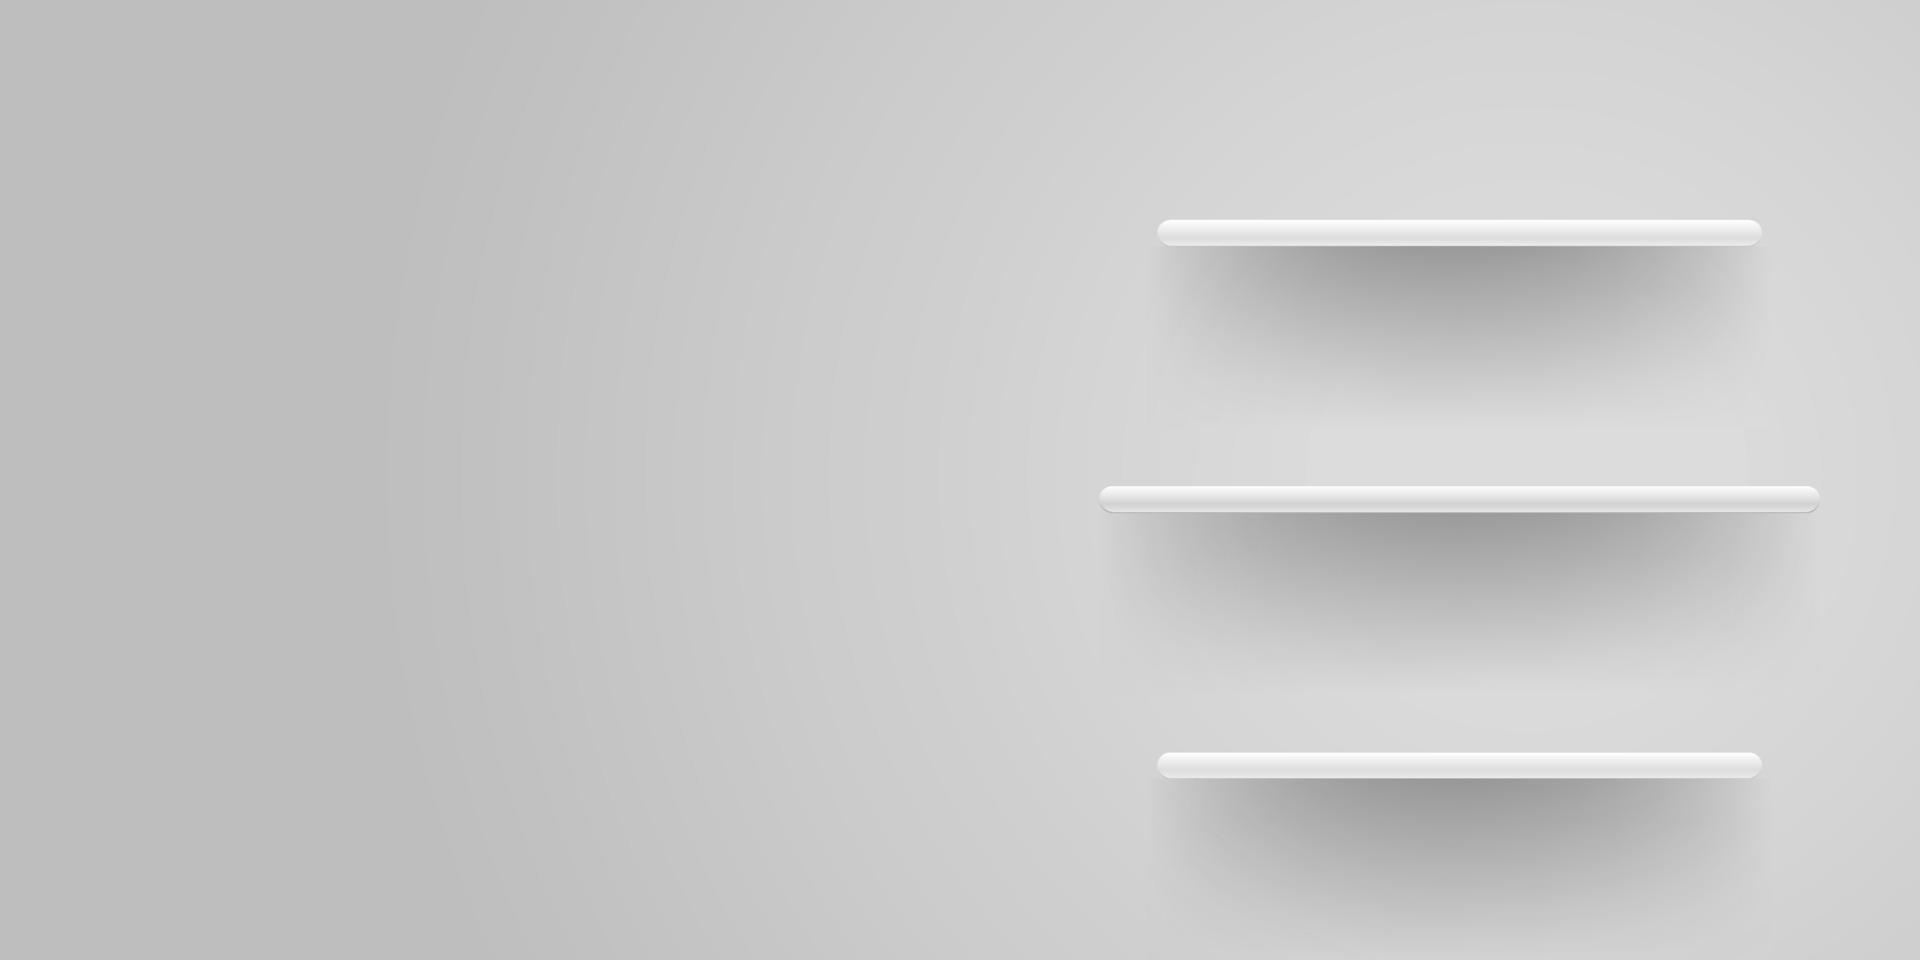 White shelf mockup, empty shelves template for product display, bookshelf, frame shelf on a wall vector